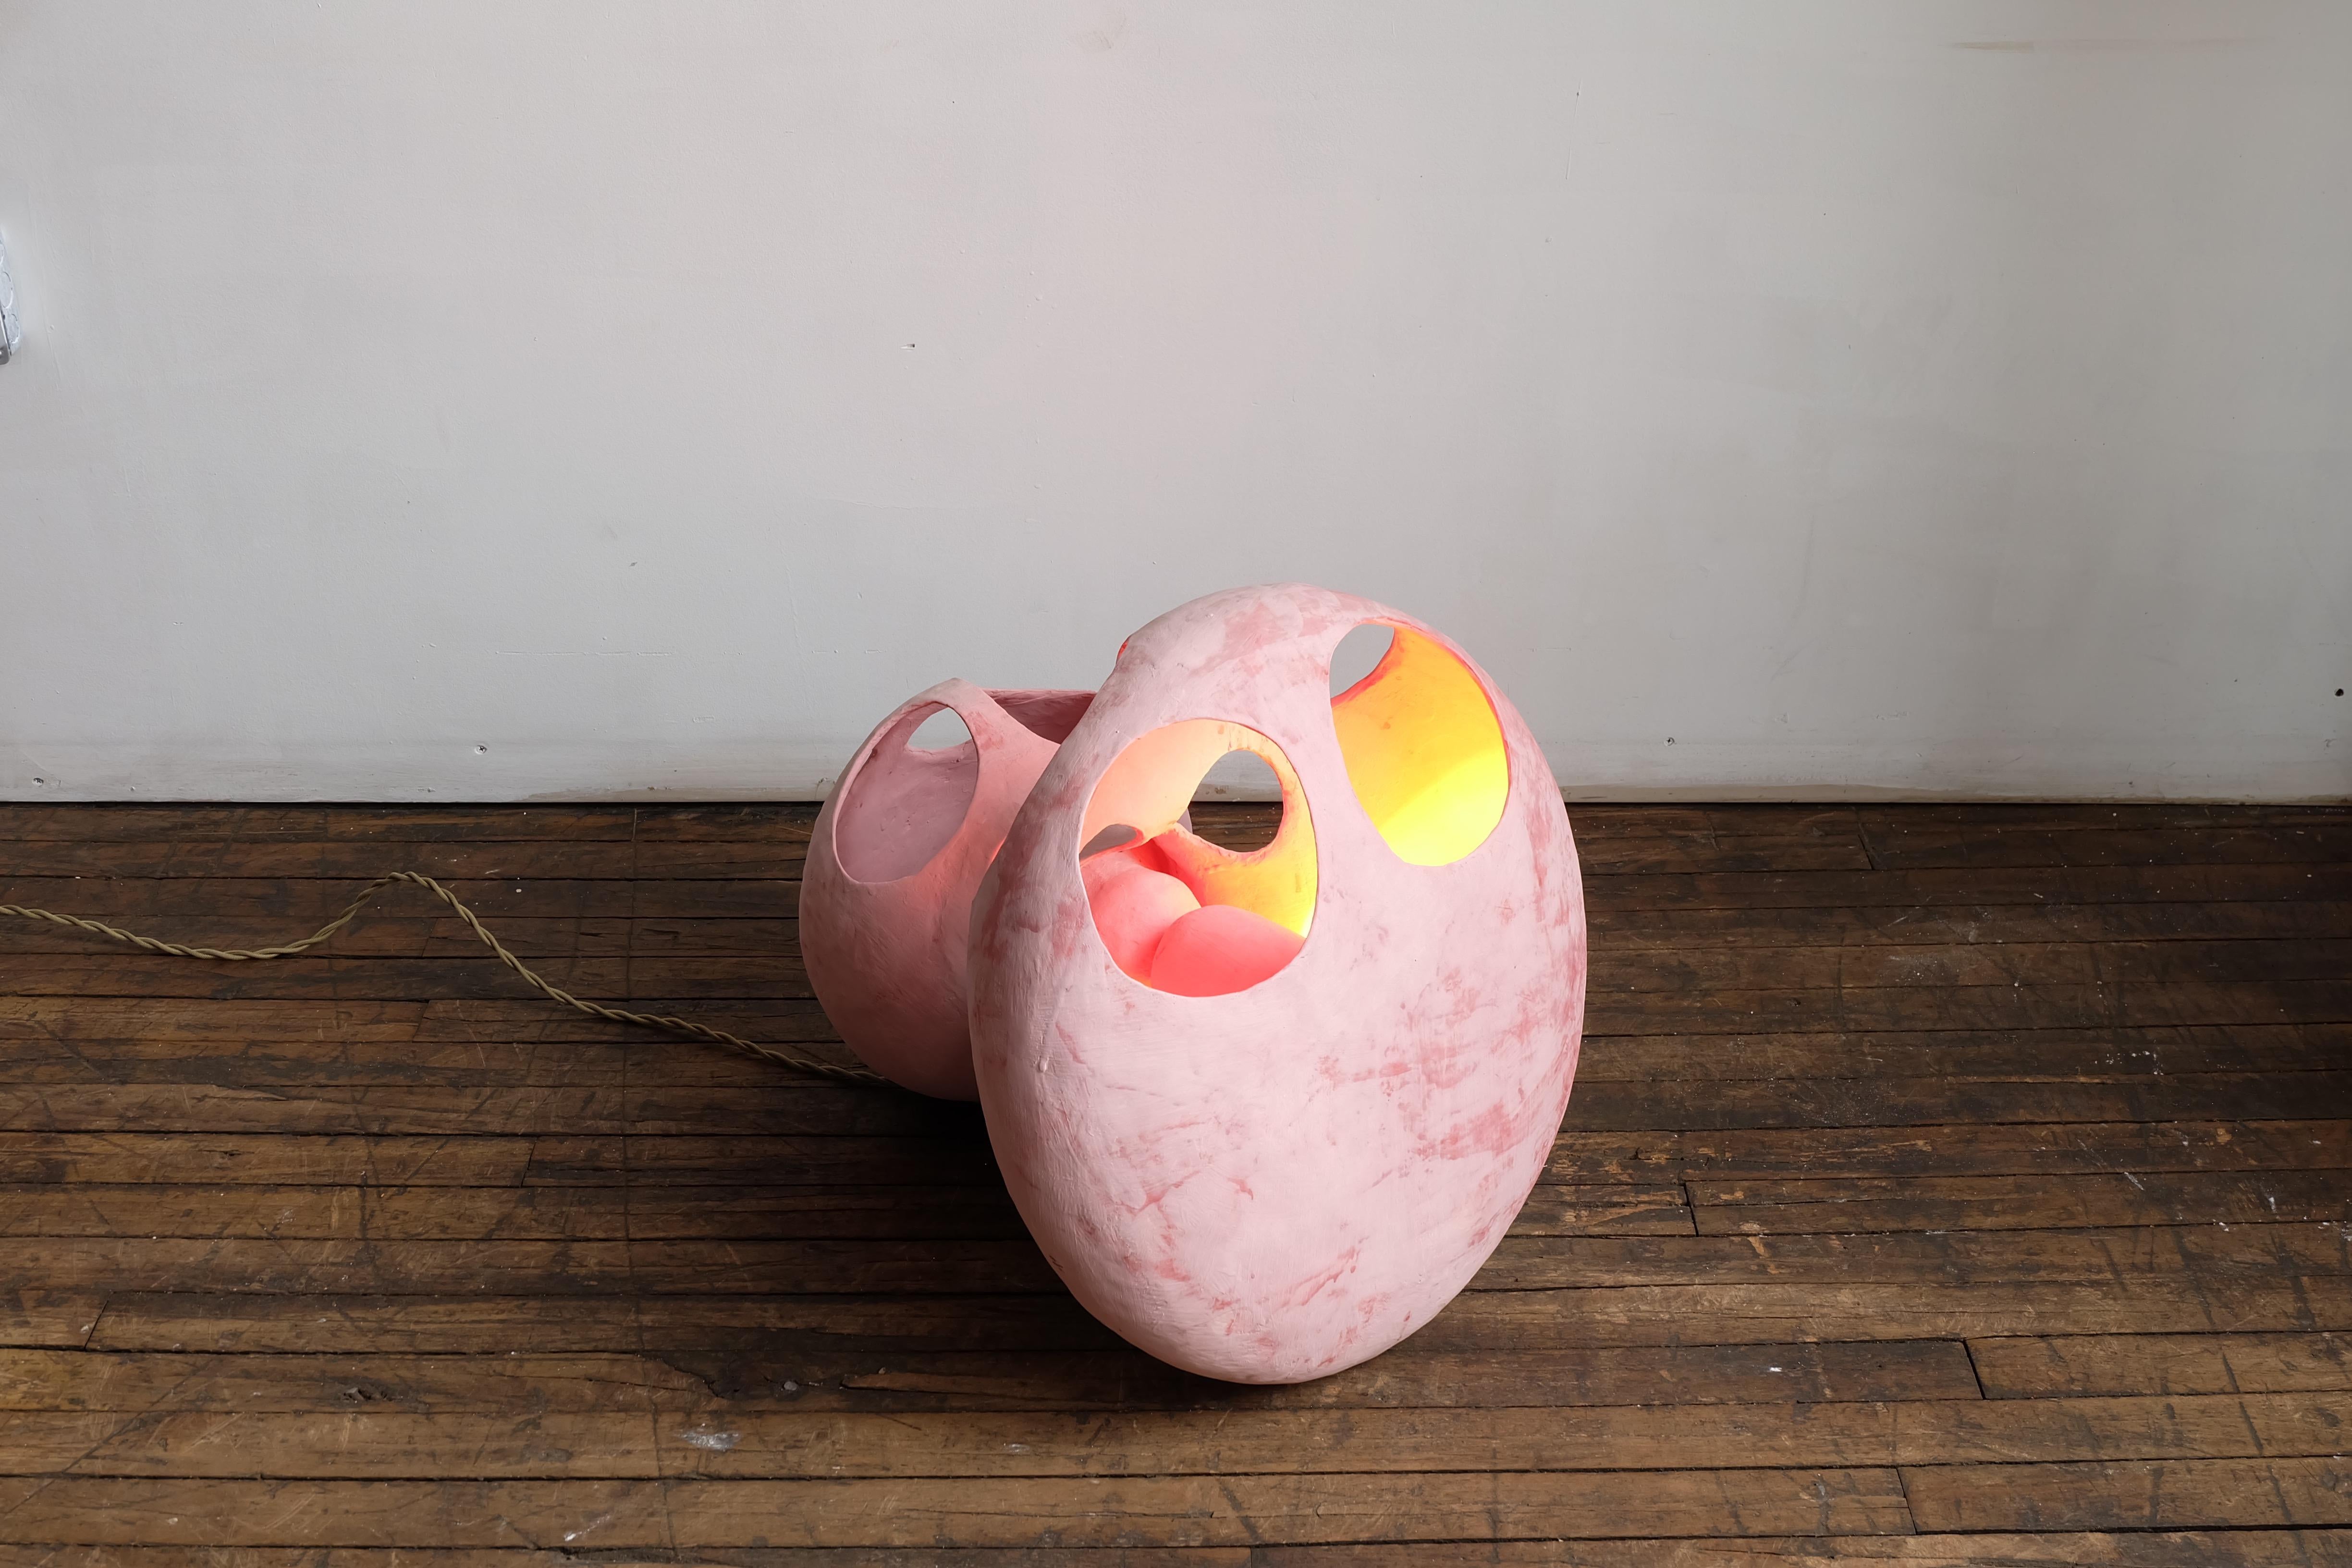 Modern Contemporary Hand-Built Matte Pink Sculptural Glazed Ceramic Spore Floor Lamp For Sale